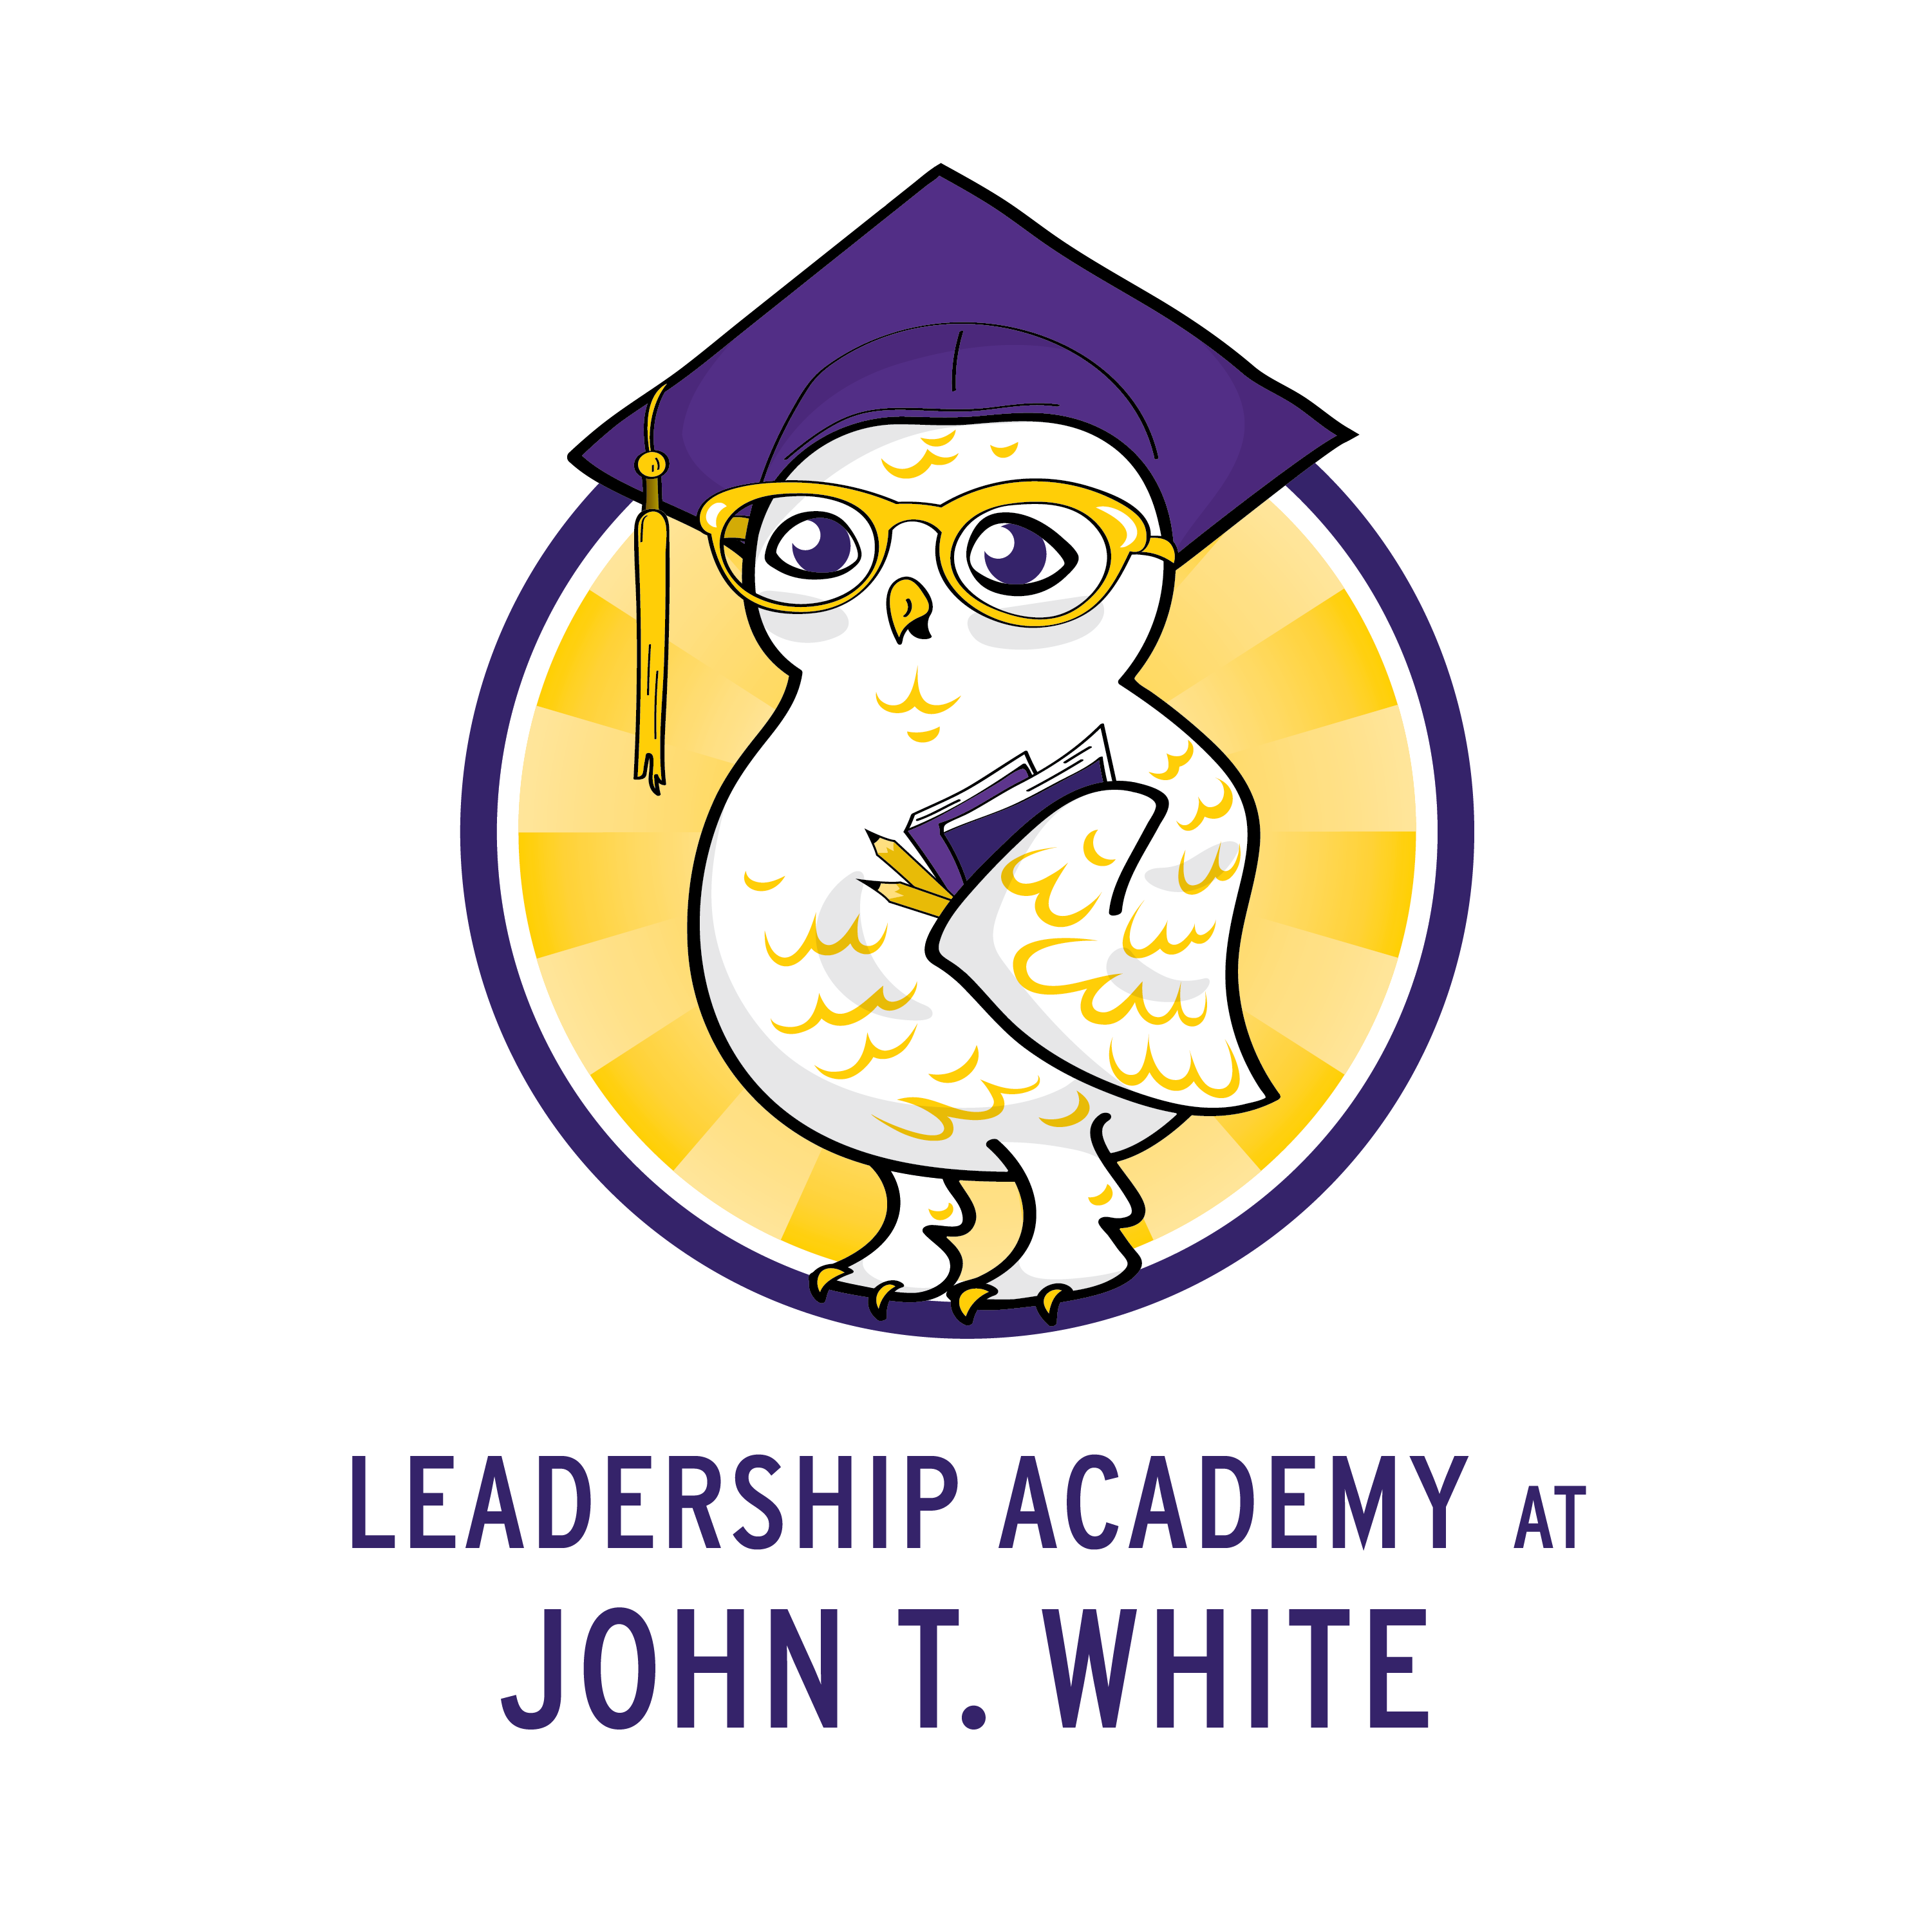 Animated image of owl serving as John T. White logo